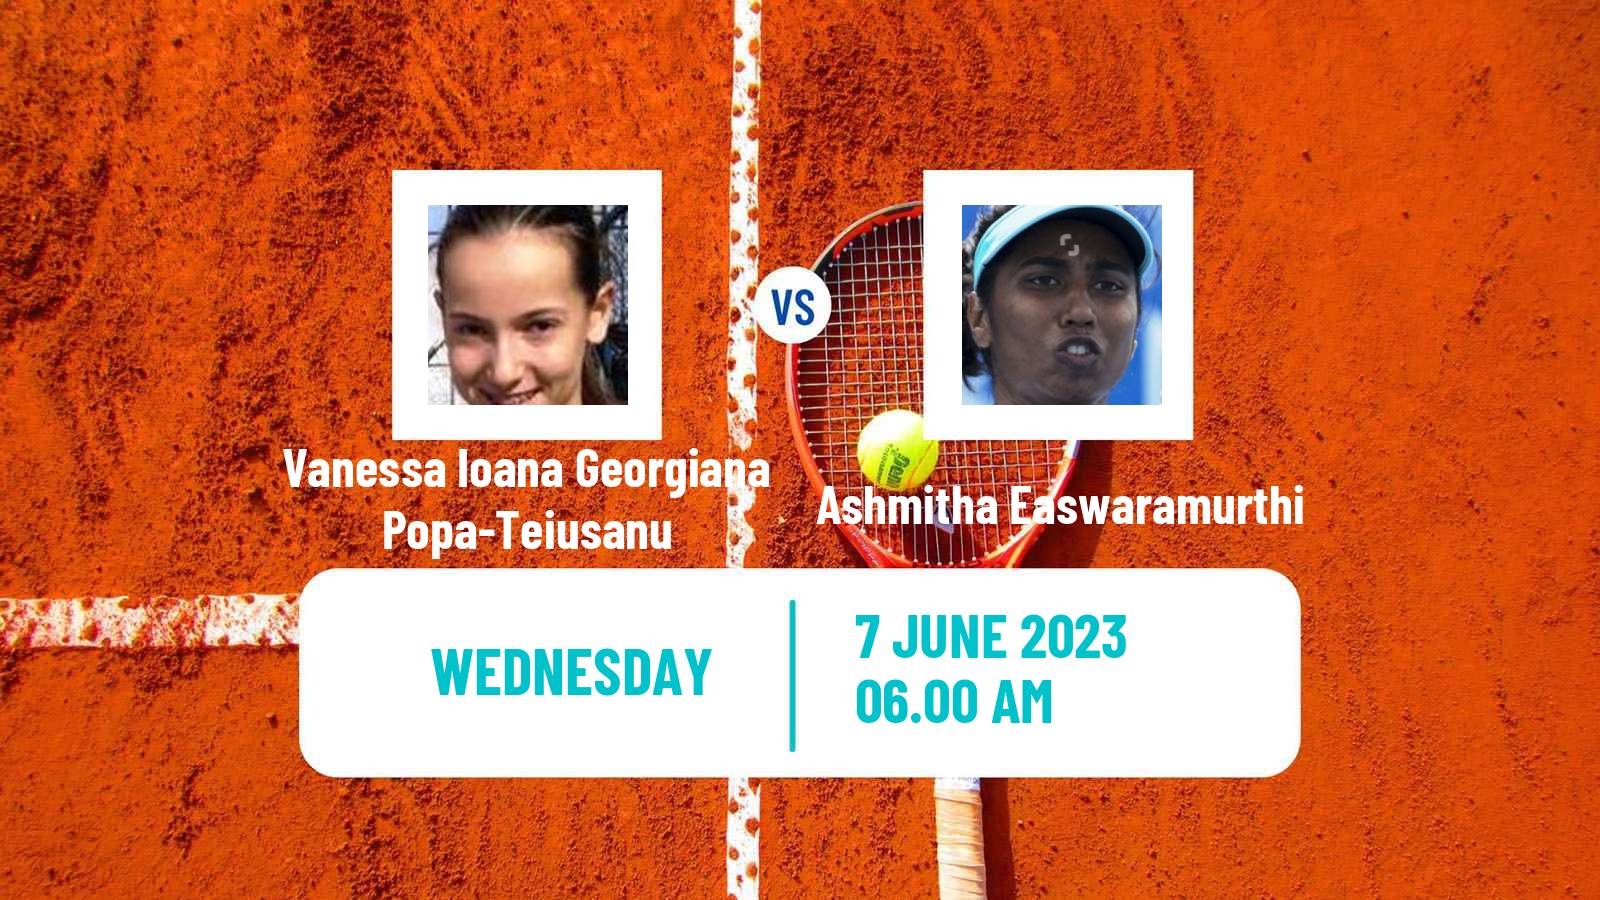 Tennis ITF W15 Monastir 18 Women Vanessa Ioana Georgiana Popa-Teiusanu - Ashmitha Easwaramurthi